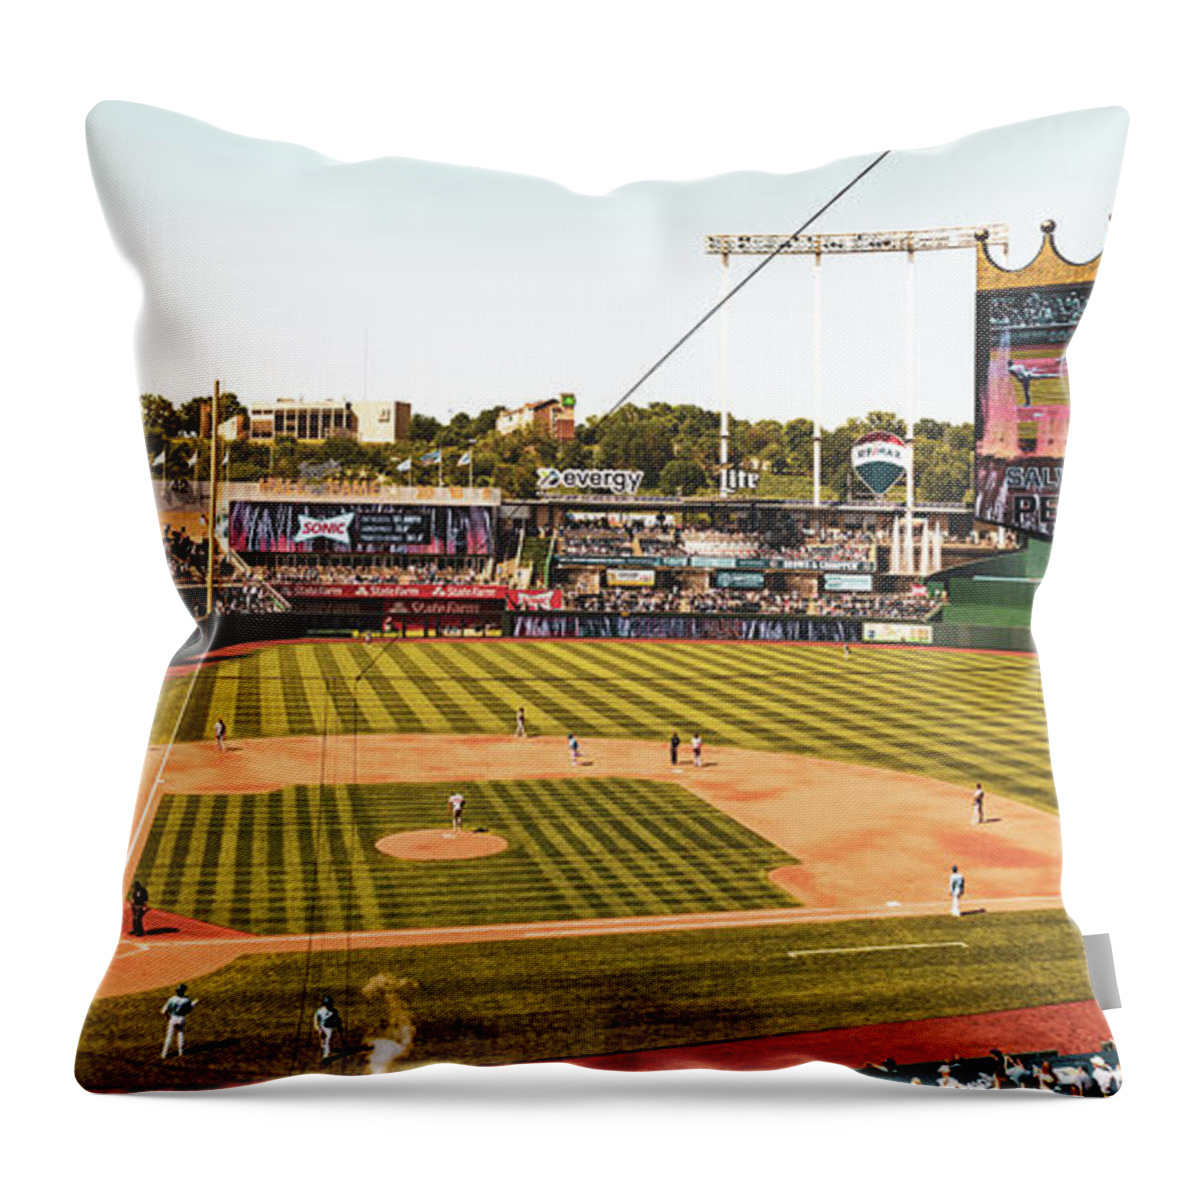 Kansas City Throw Pillow featuring the photograph Kansas City Home Run Panorama At The K by Gregory Ballos